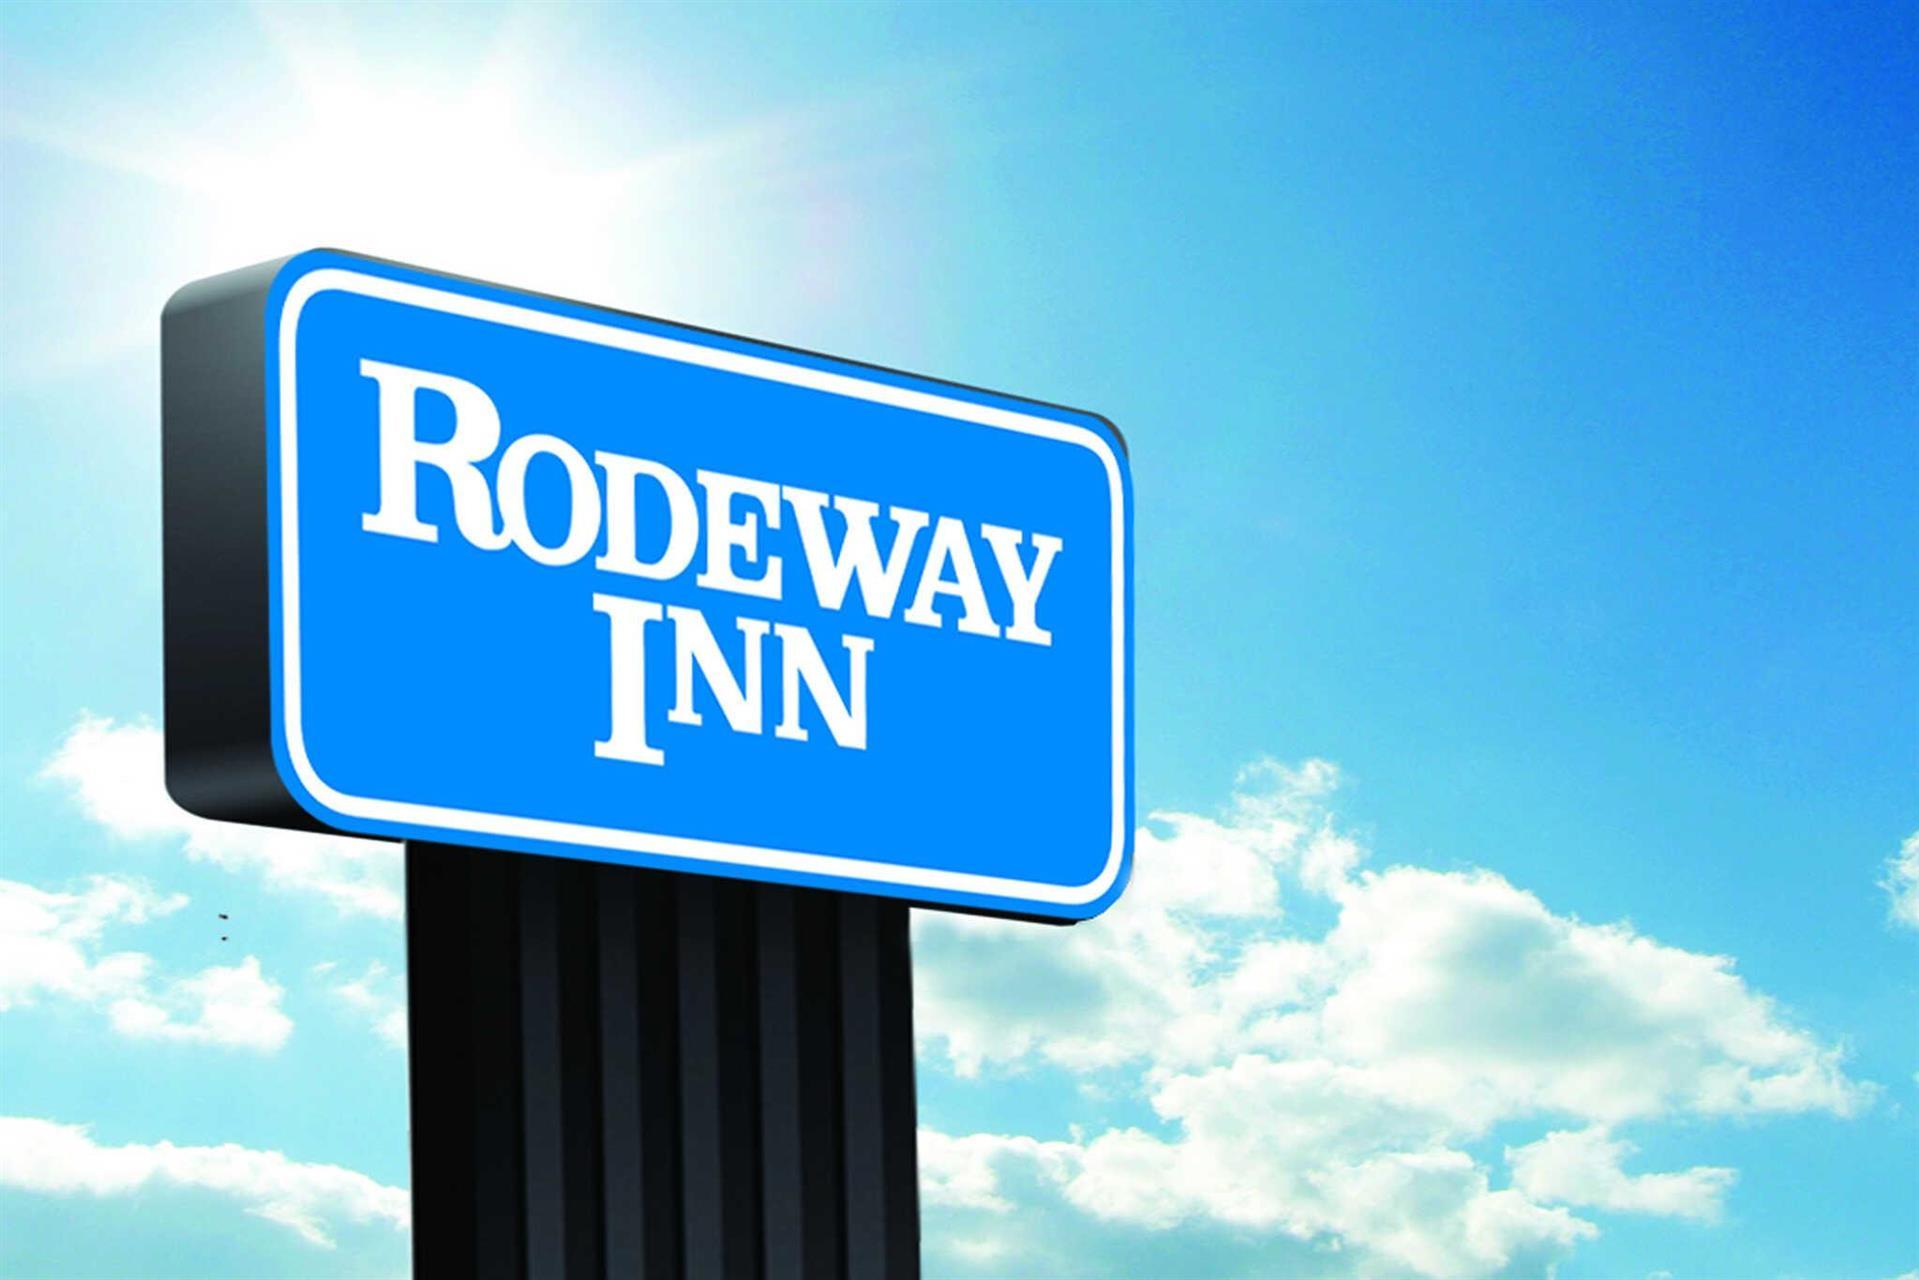 Rodeway Inn, Milpitas in Milpitas, CA